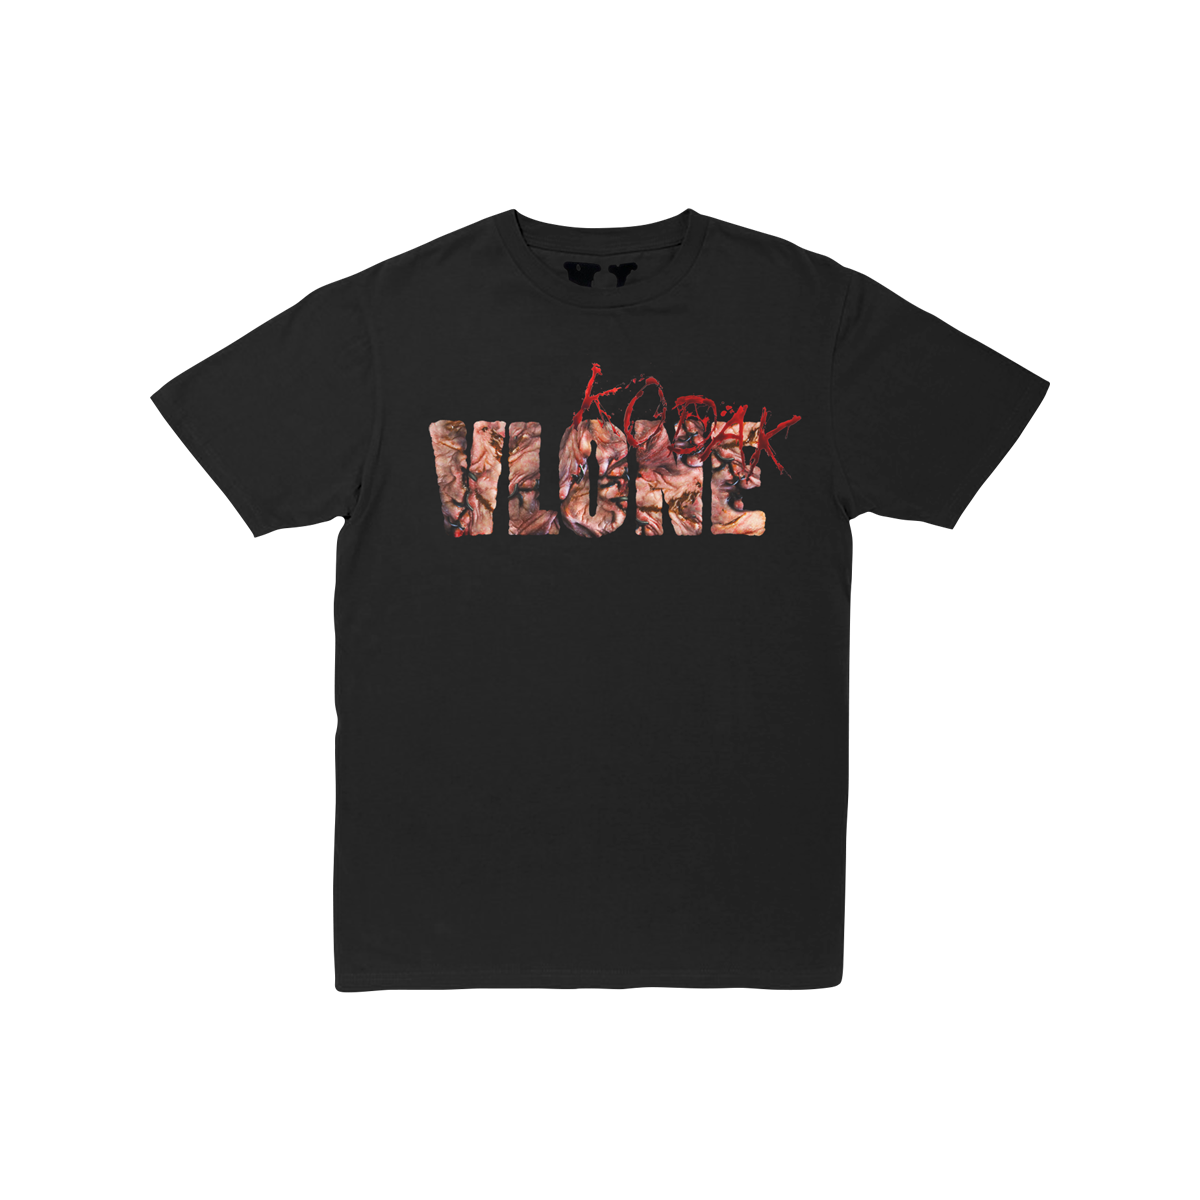 VLONEKB T-Shirt - Black